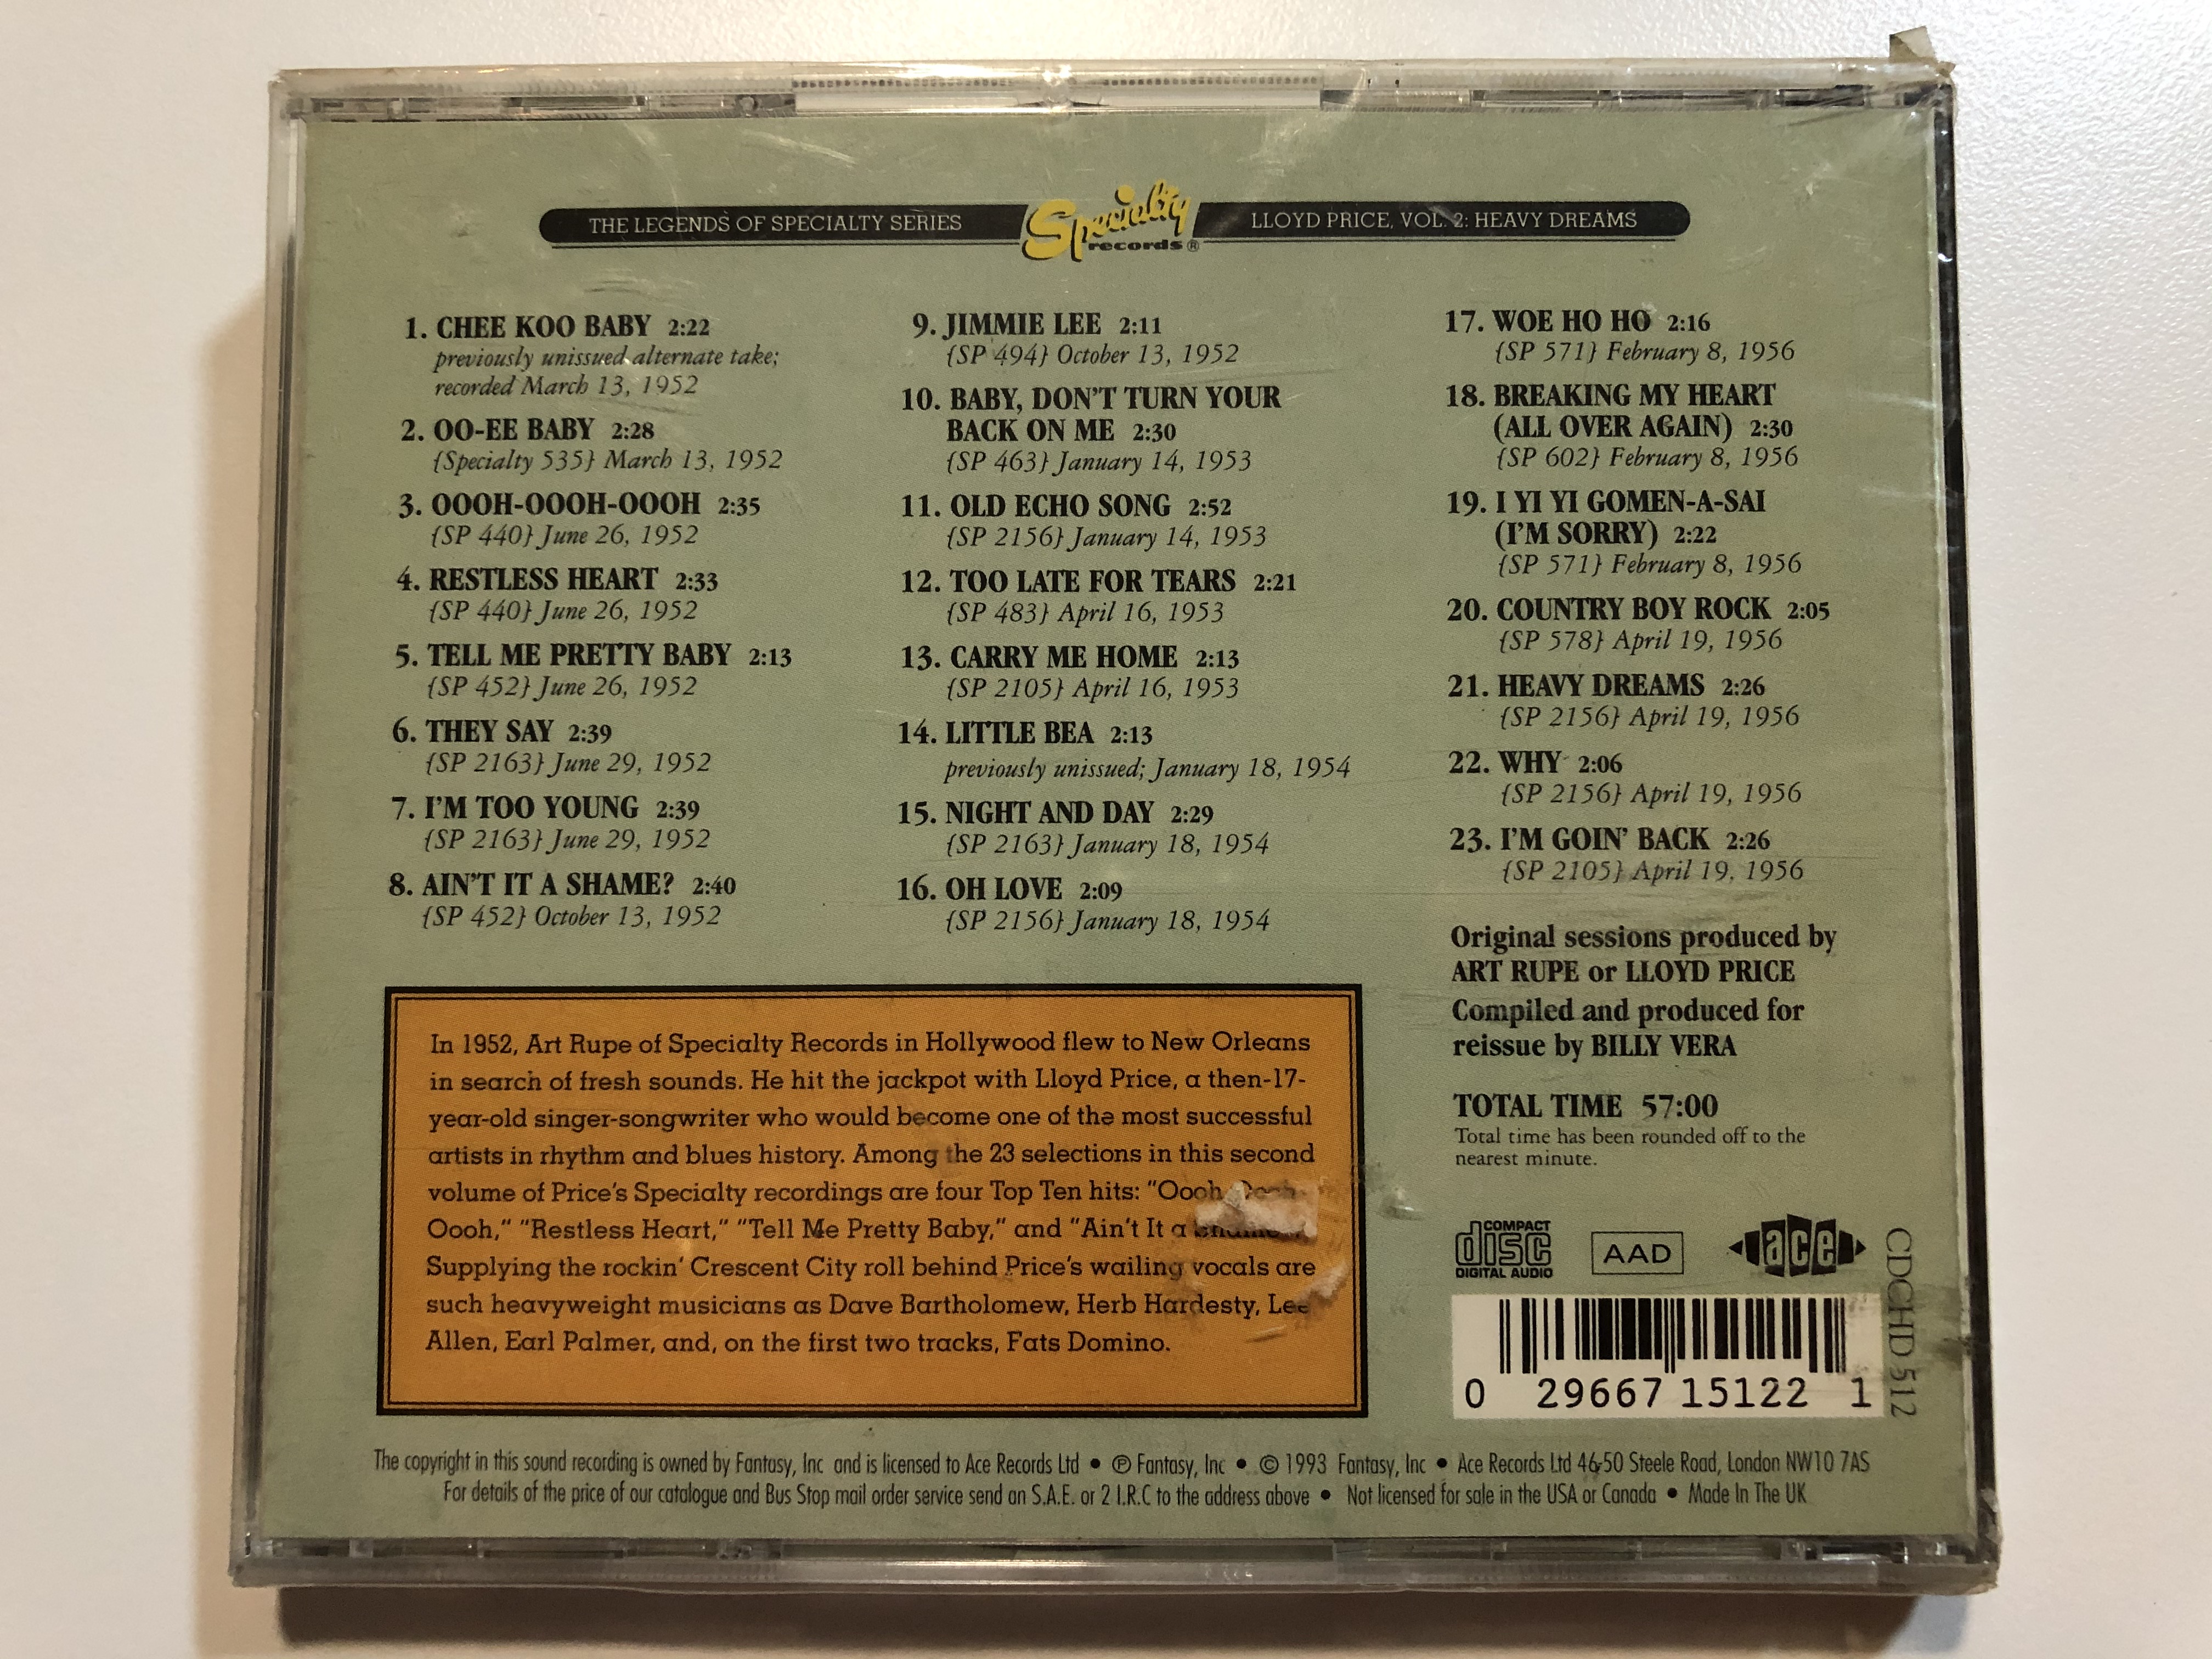 lloyd-price-vol.2-heavy-dreams-the-legends-of-specialty-series-ace-audio-cd-1993-cdchd-512-2-.jpg